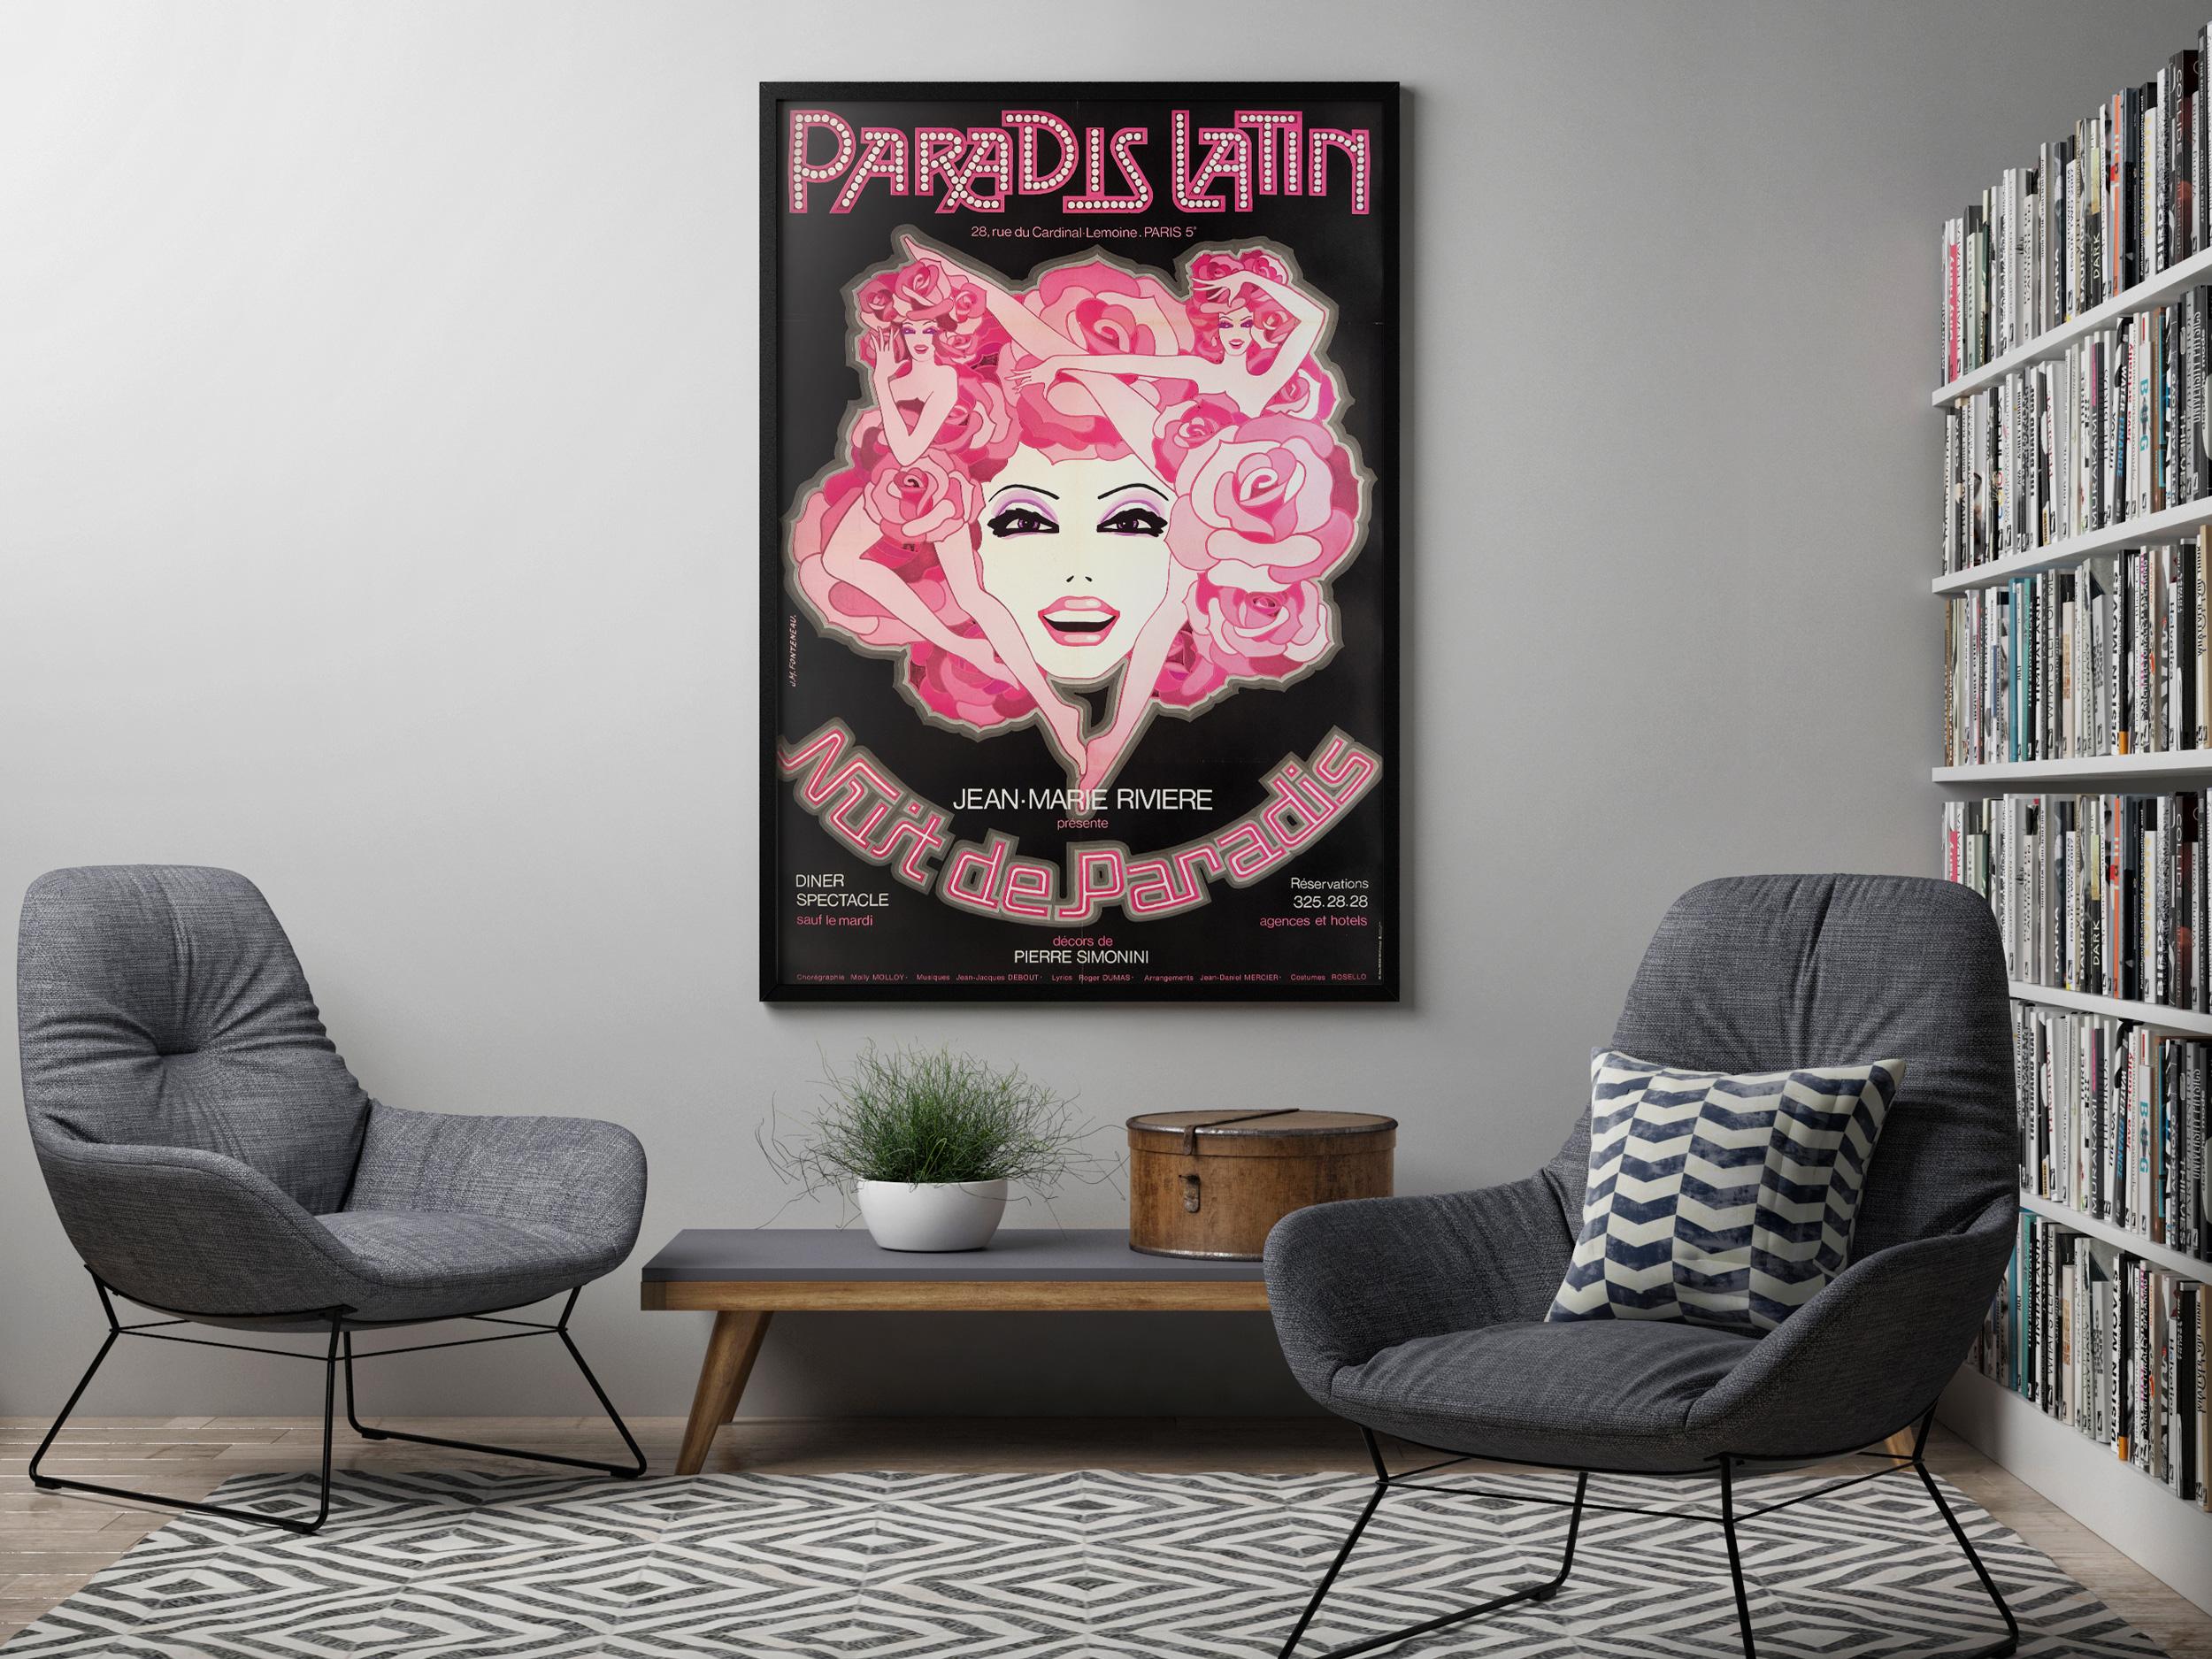 Stunning original vintage 1970s French advertising poster for Parisian Cabaret show Paradis Latin - Nuit de Paradis. We love the design by J. M. Fonteneau.

The Paradis Latin is a theater at number 28, rue du Cardinal Lemoine, in the Latin Quarter